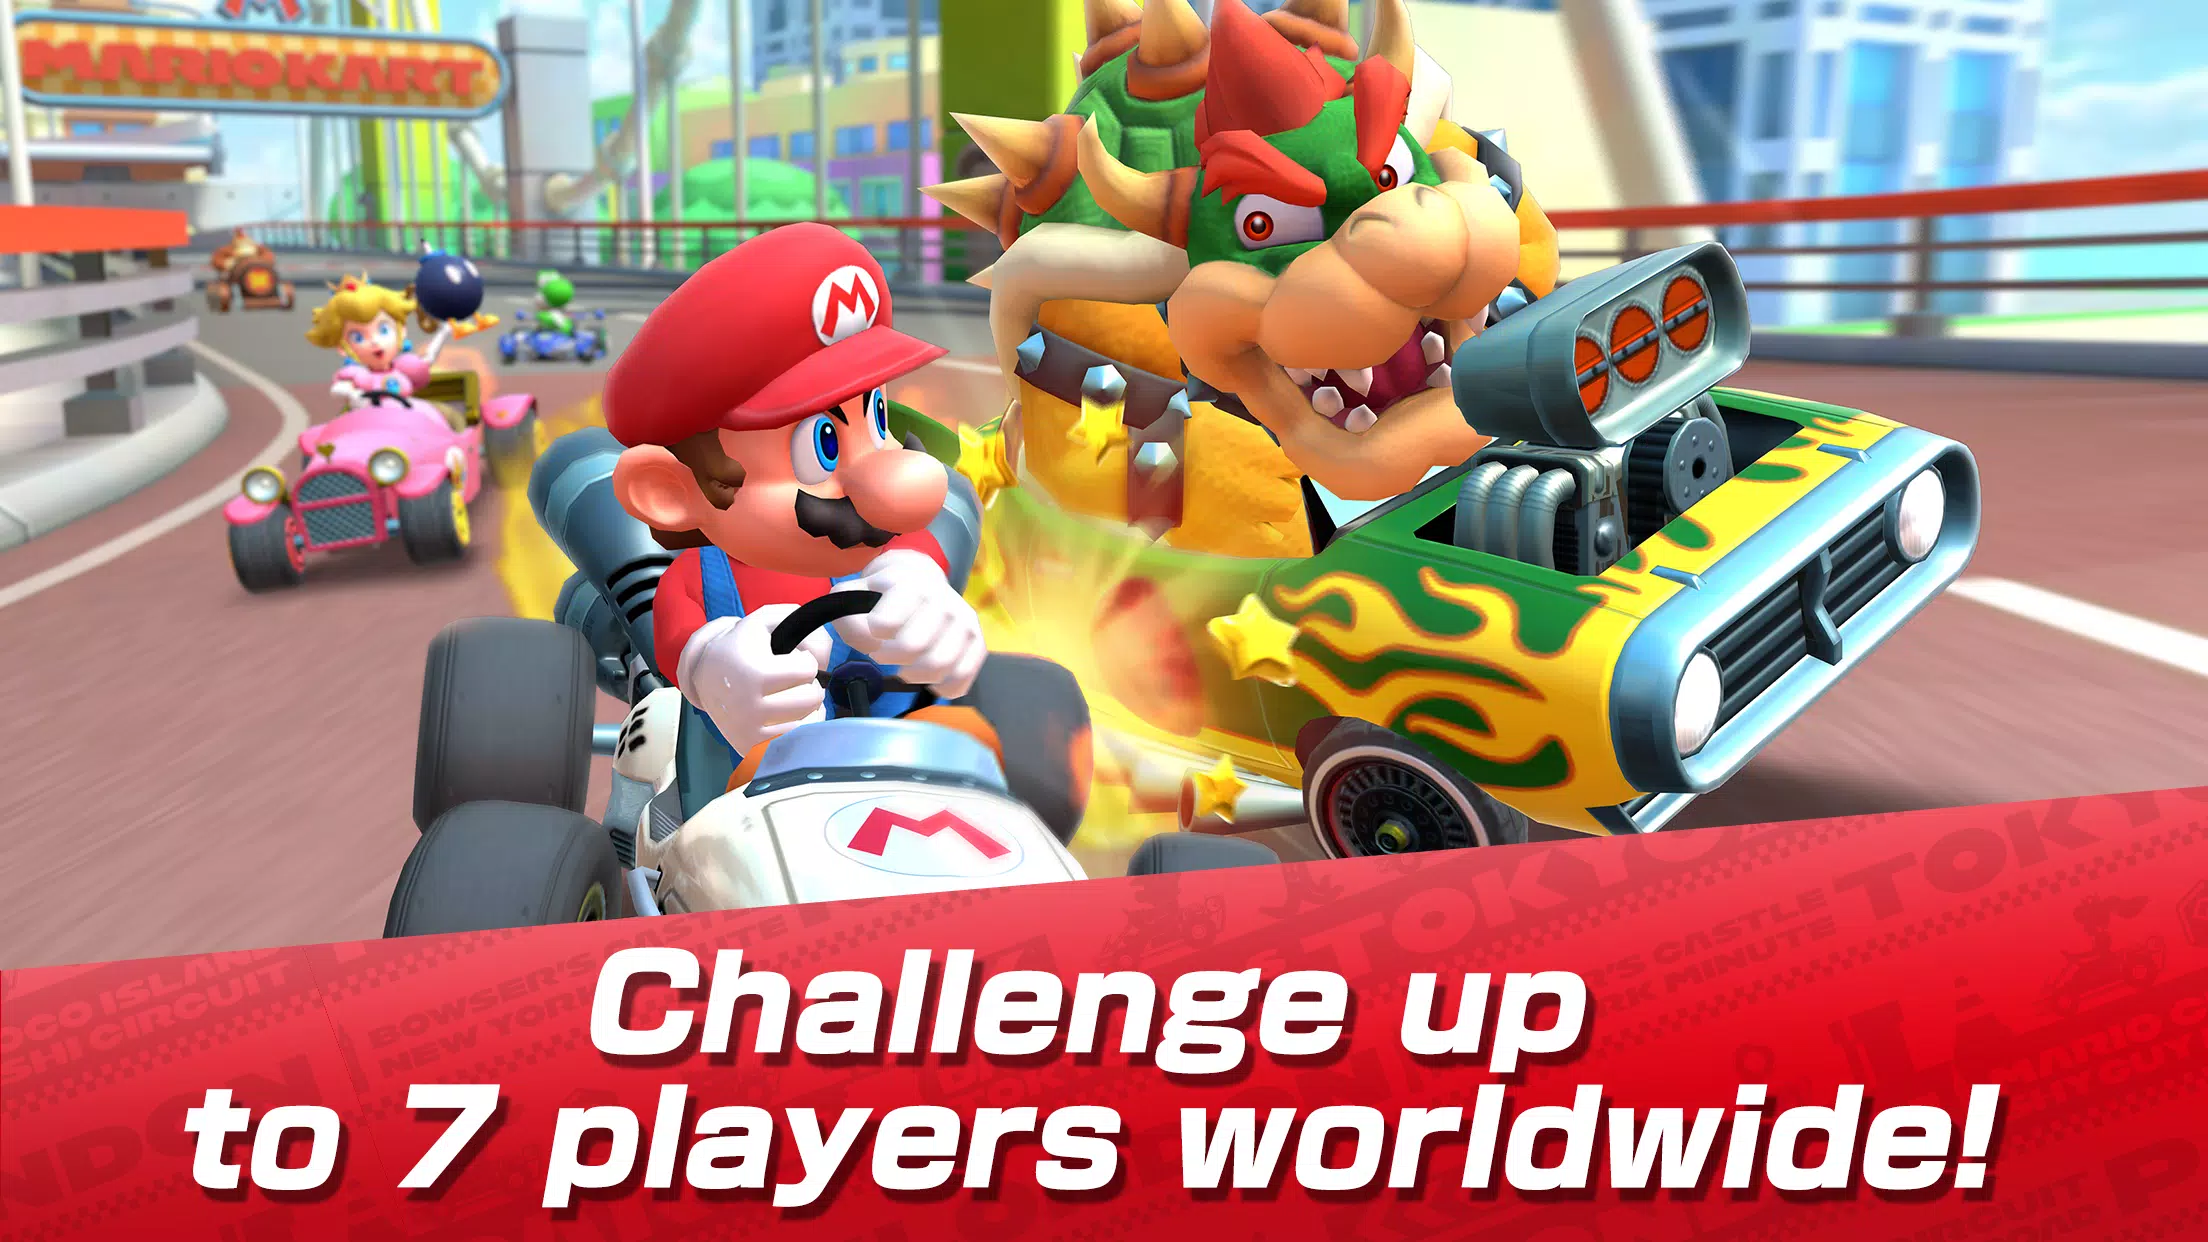 Mario Kart Tour APK 3.4.1 - Download Free for Android